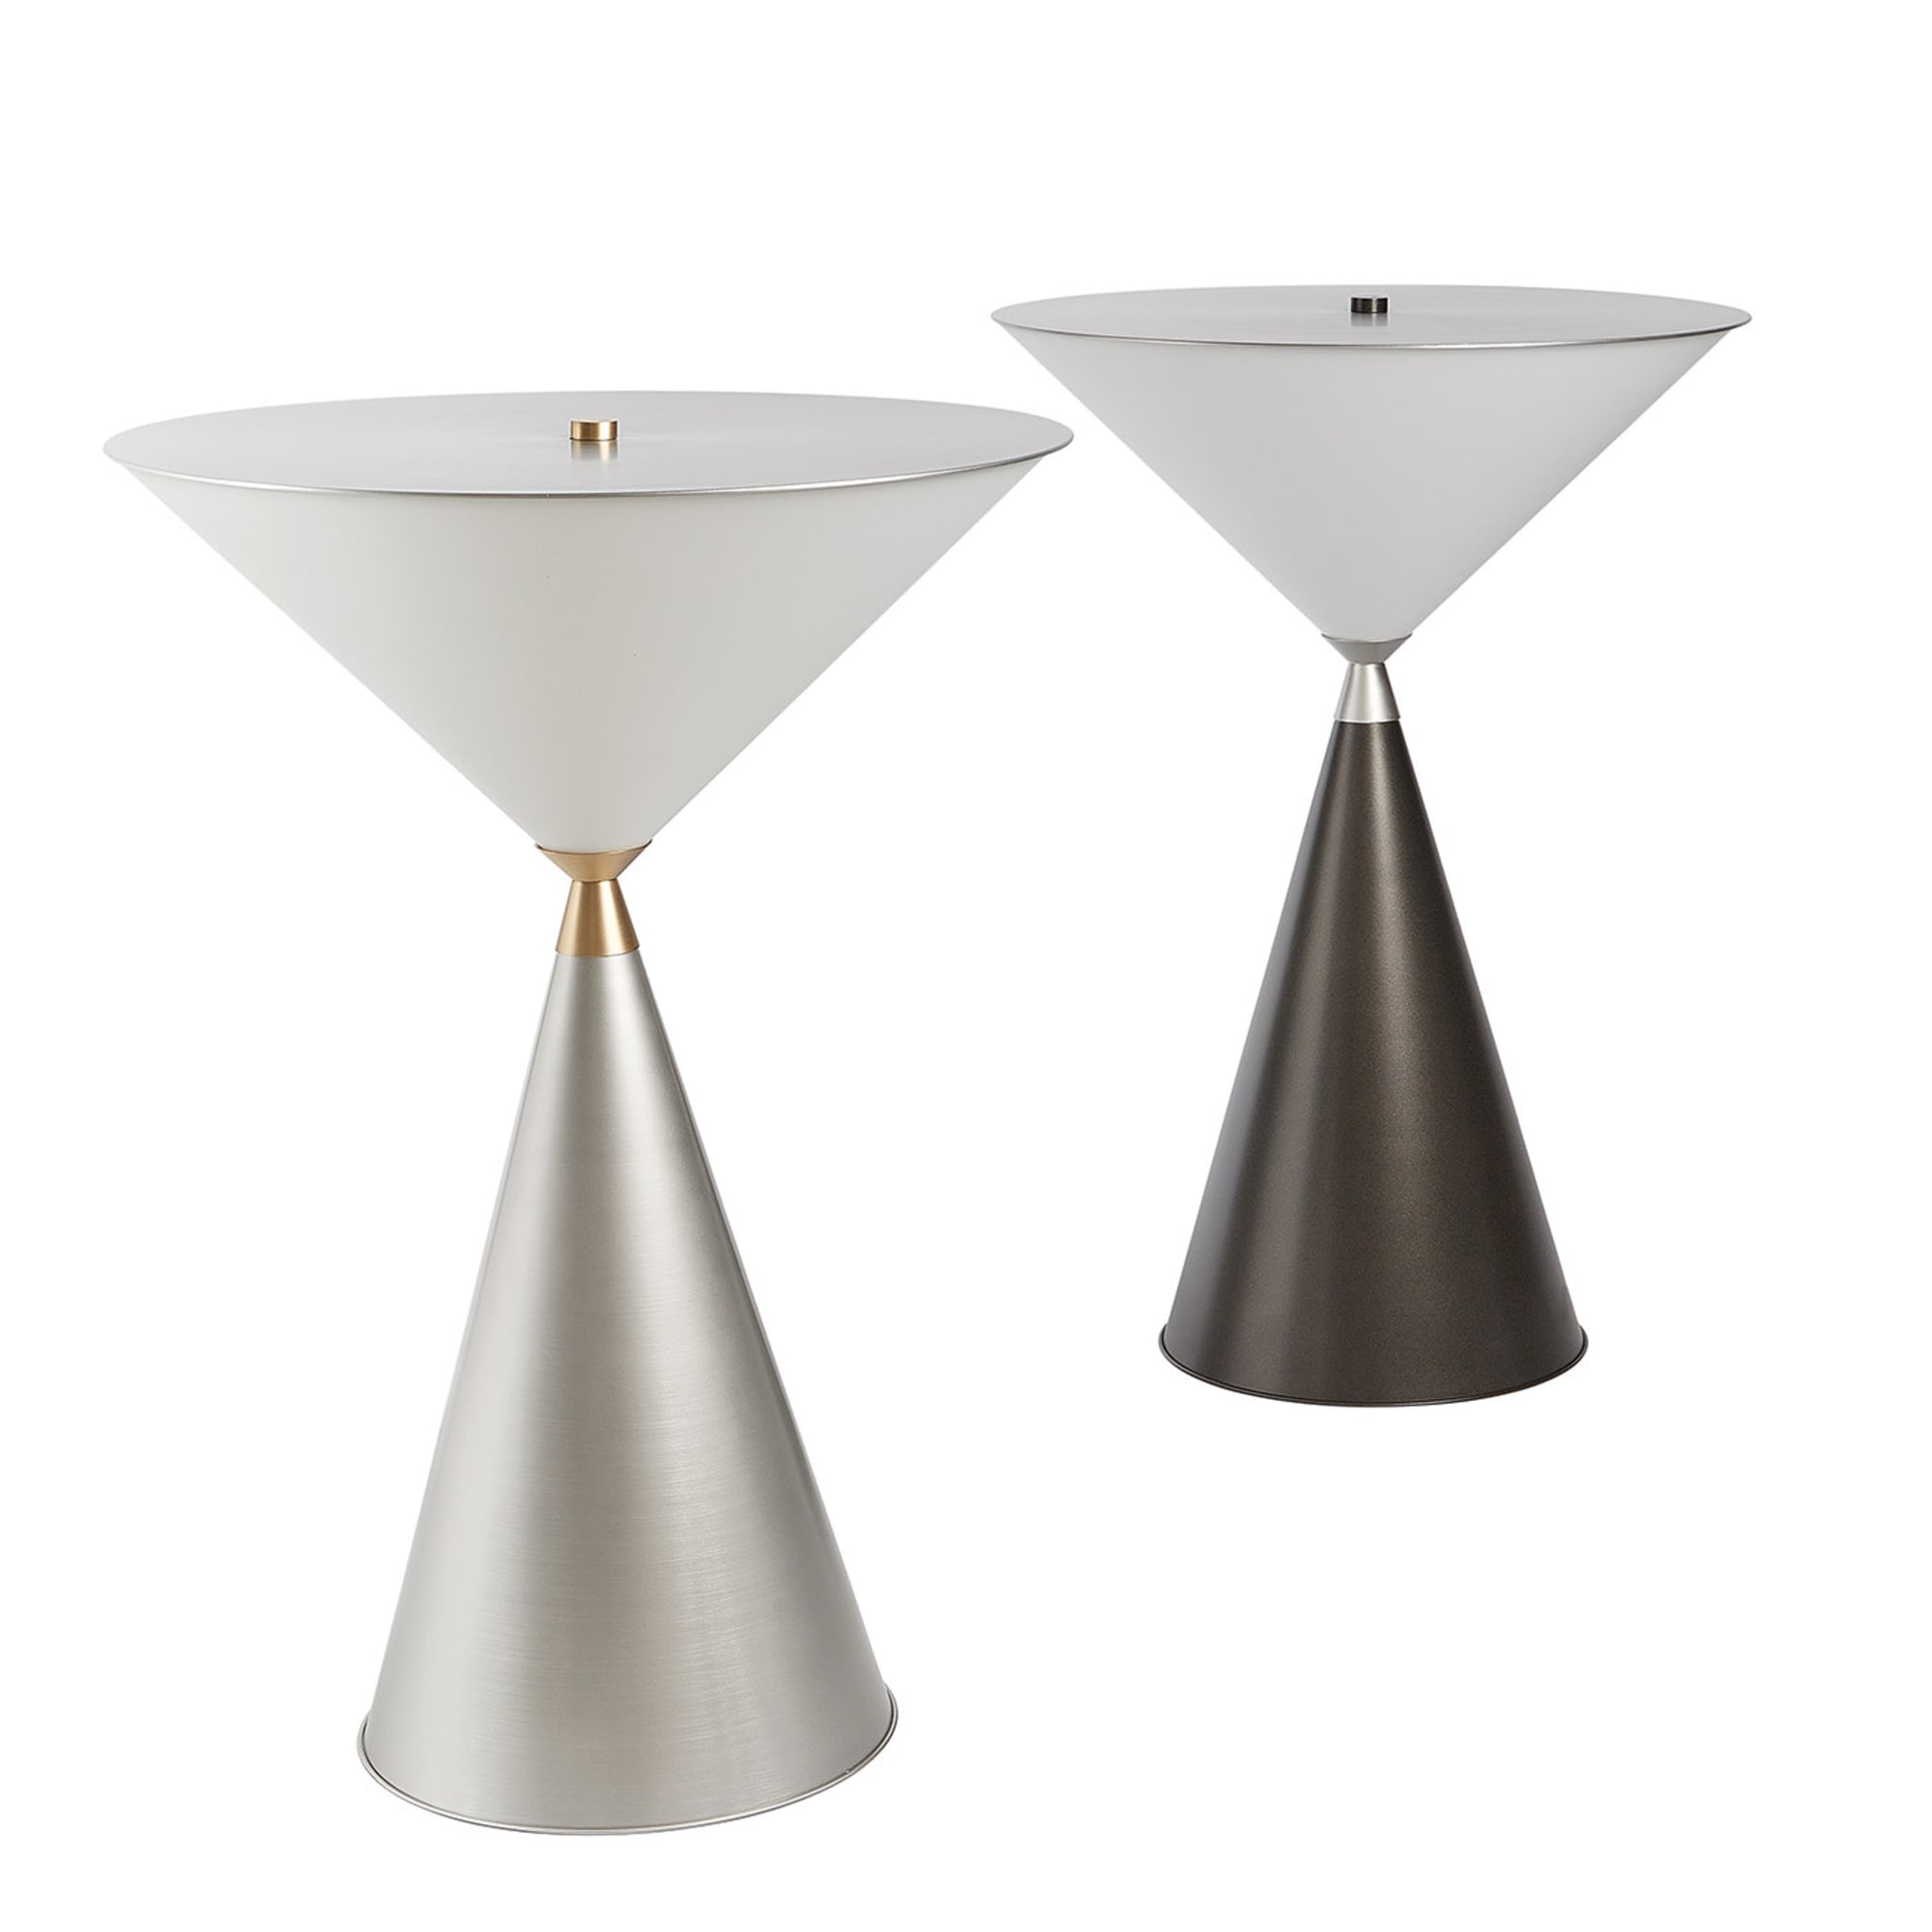 Icones Table Lamp by Lorenza Bozzoli - Alternative view 1